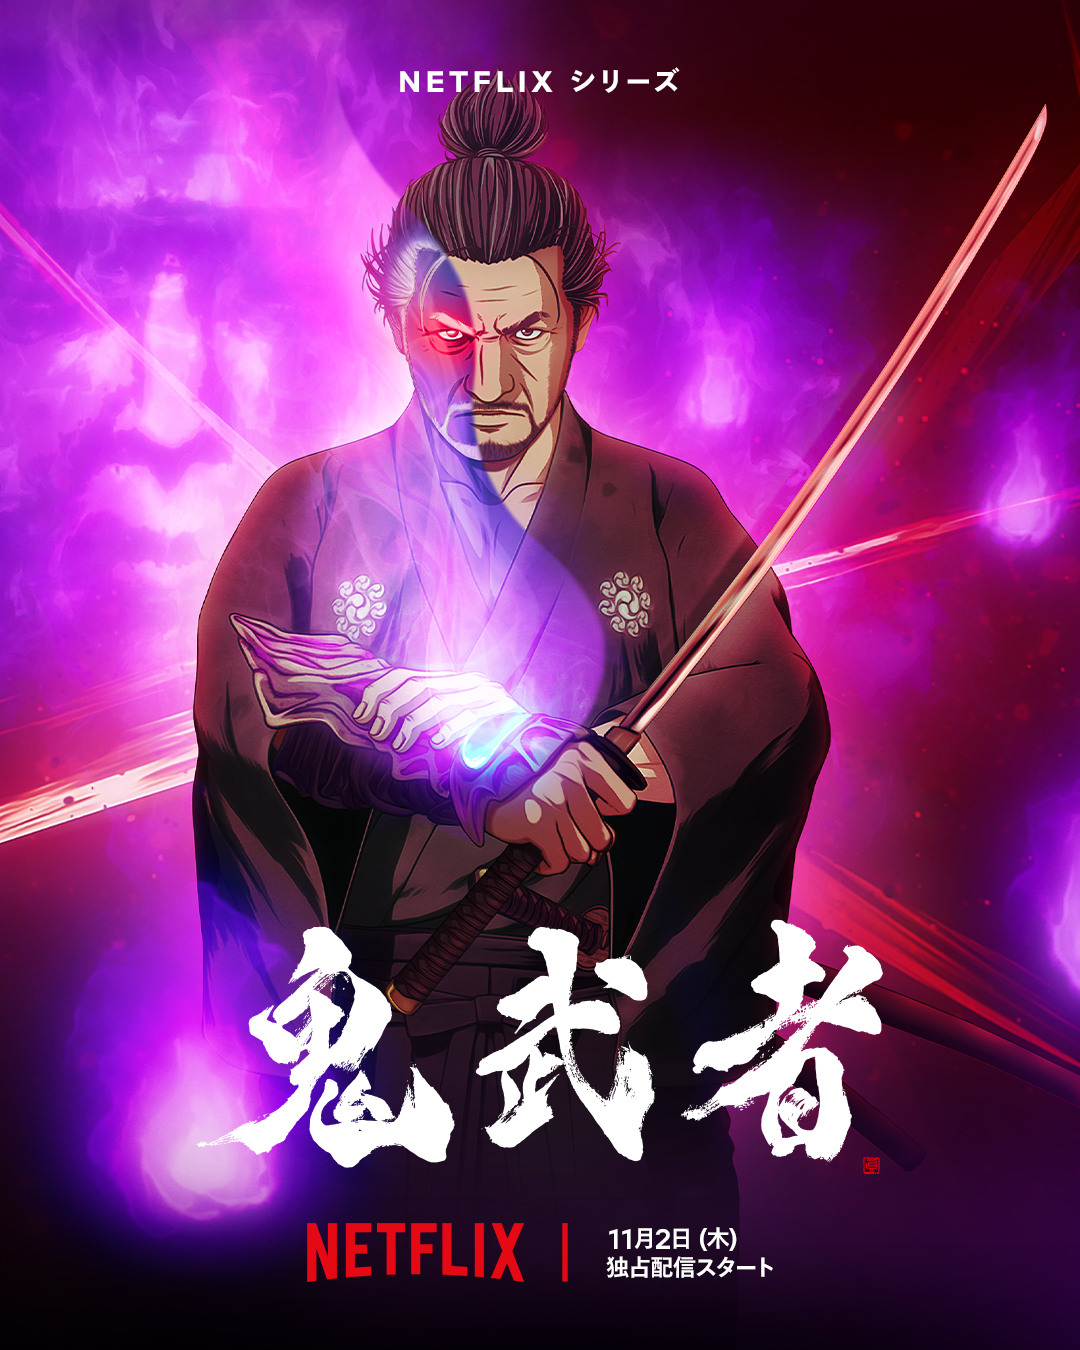 CAPCOM 游戏改编、 Netflix 动画《鬼武者》公开中文正式预告与主视觉图-二次元COS分享次元吧